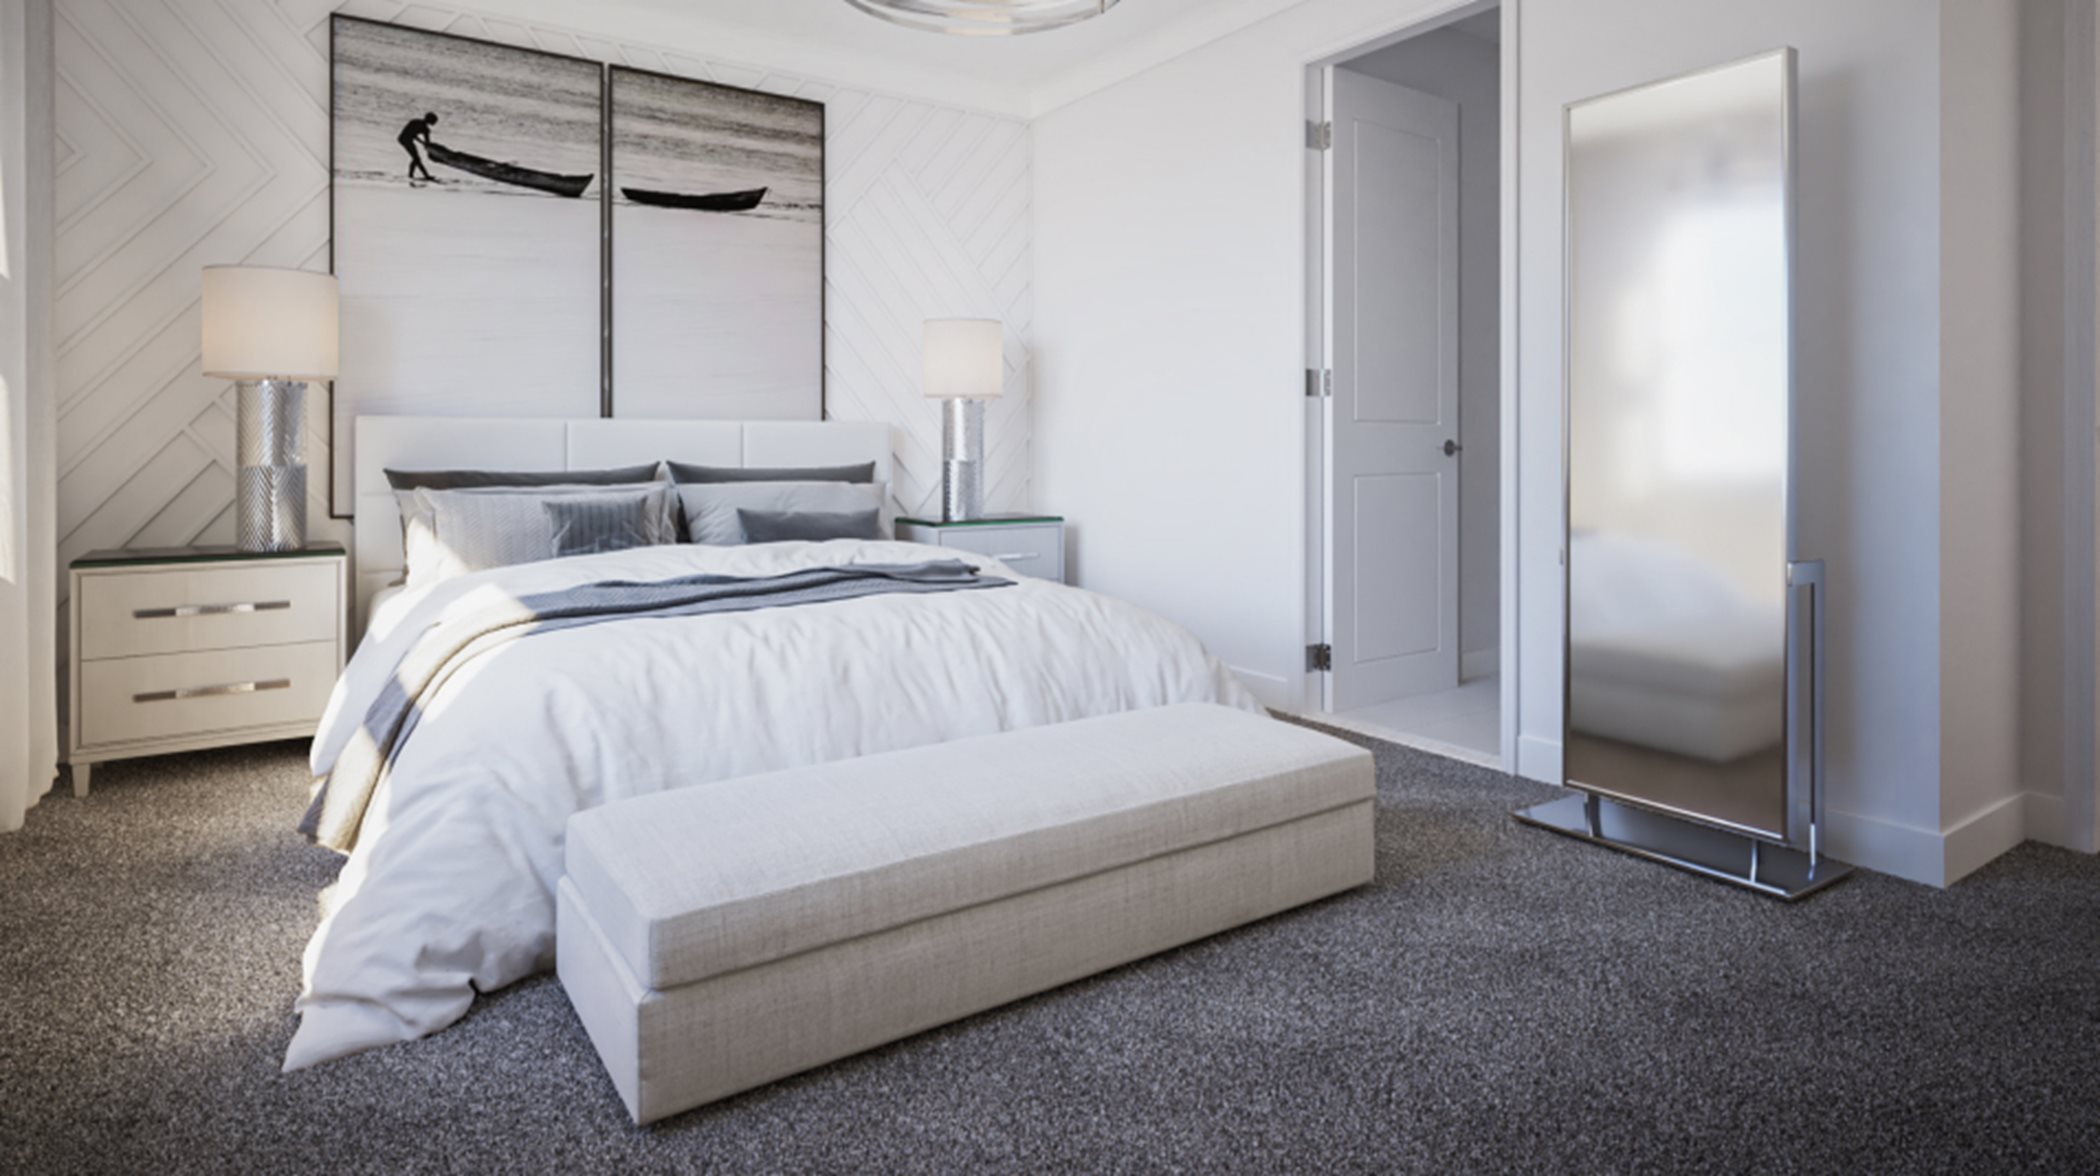 Plush carpet in bedrooms